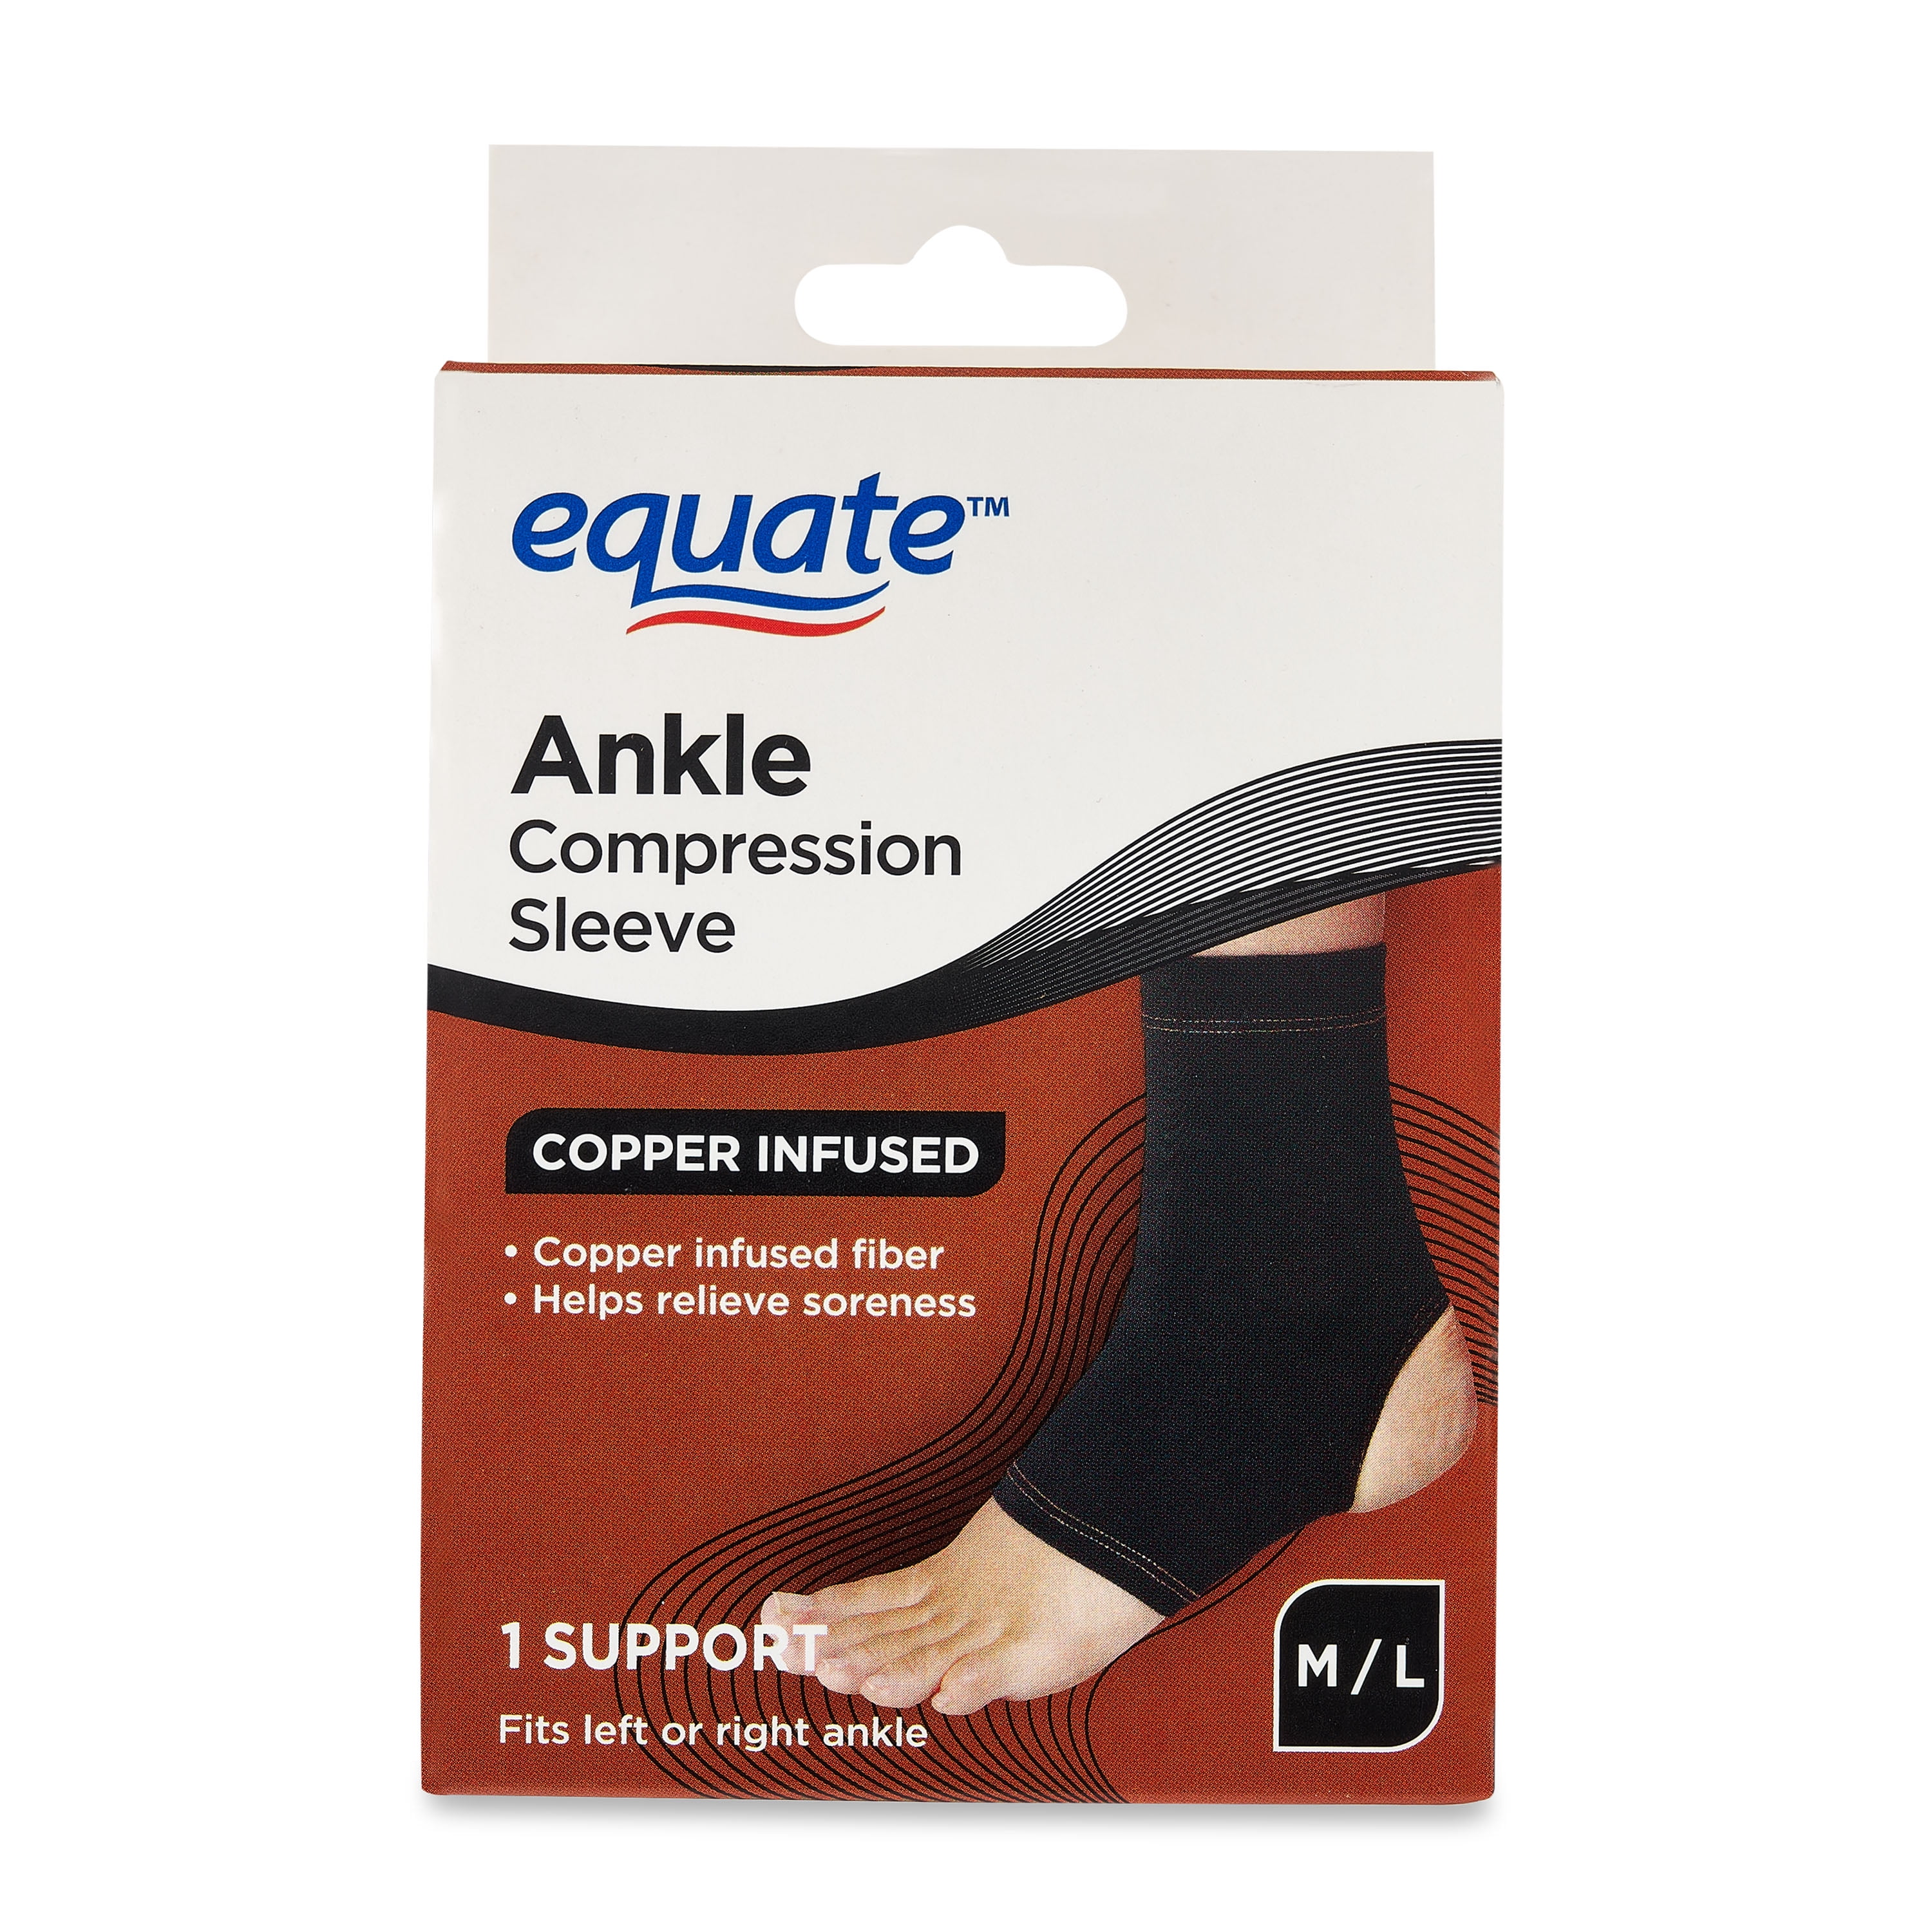 Equate Copper-Infused Ankle Compression Sleeve Brace, Medium / Large